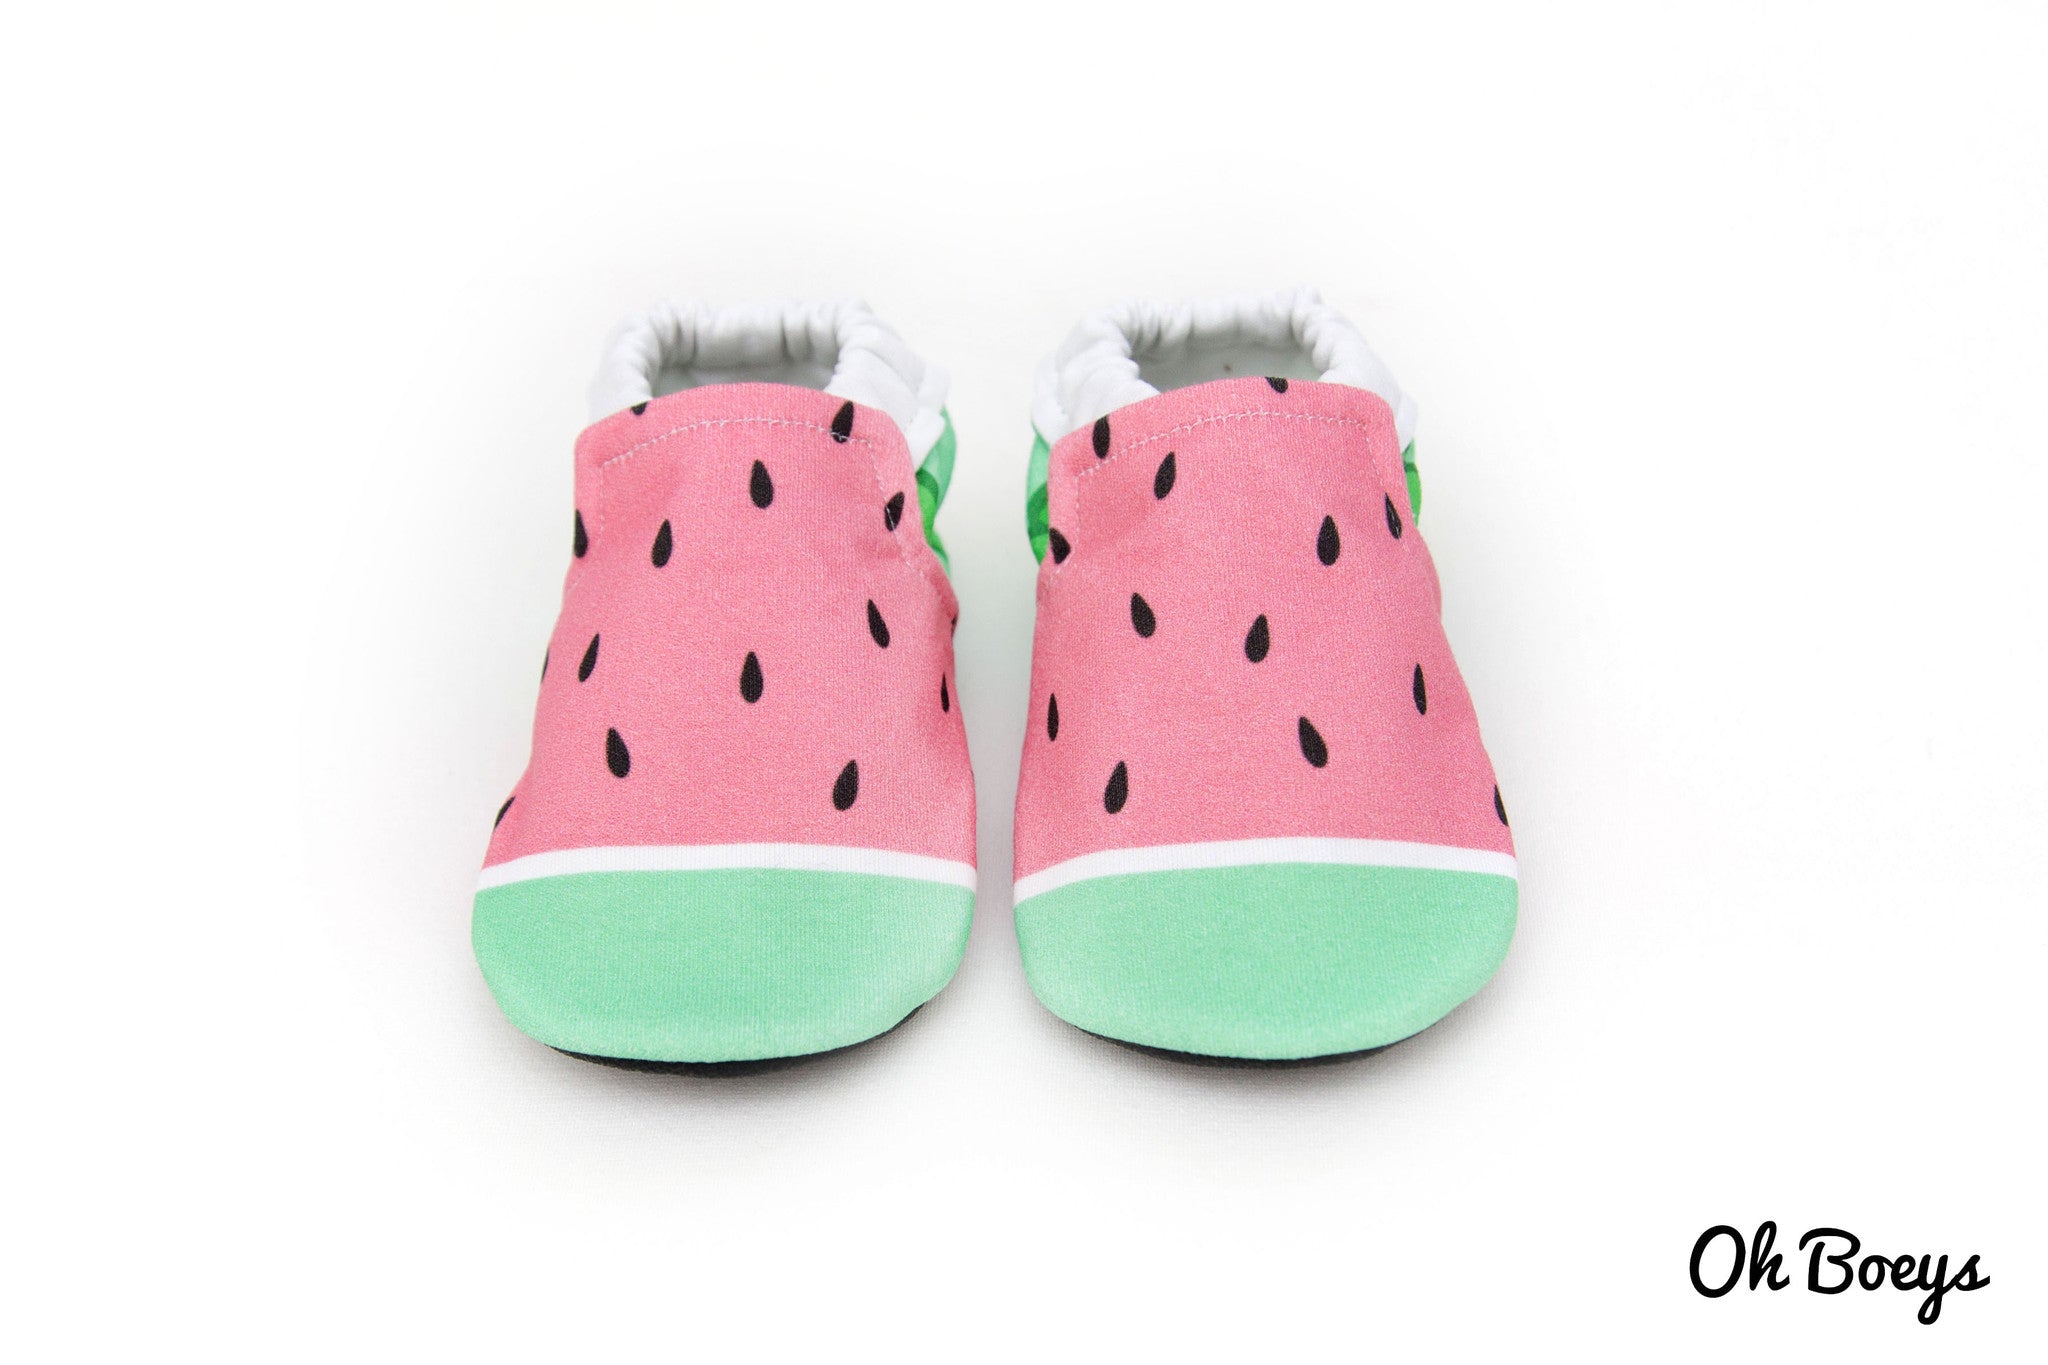 Watermelon Shoes – OhBoeys